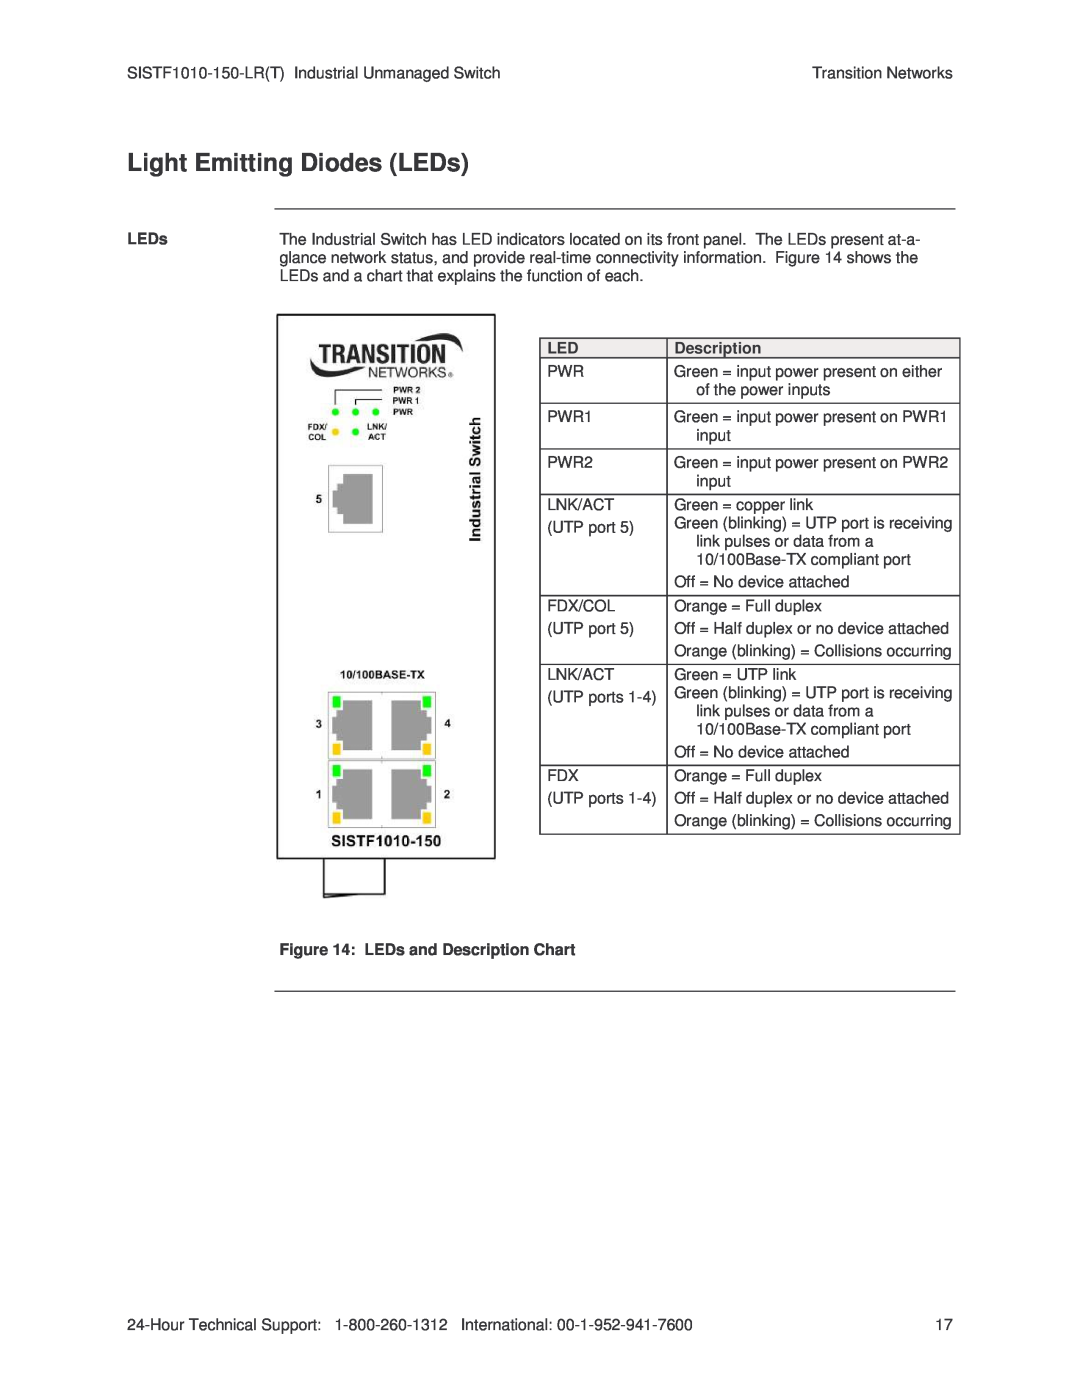 Transition Networks SISTF1010-150-LR(T) installation manual Light Emitting Diodes LEDs 